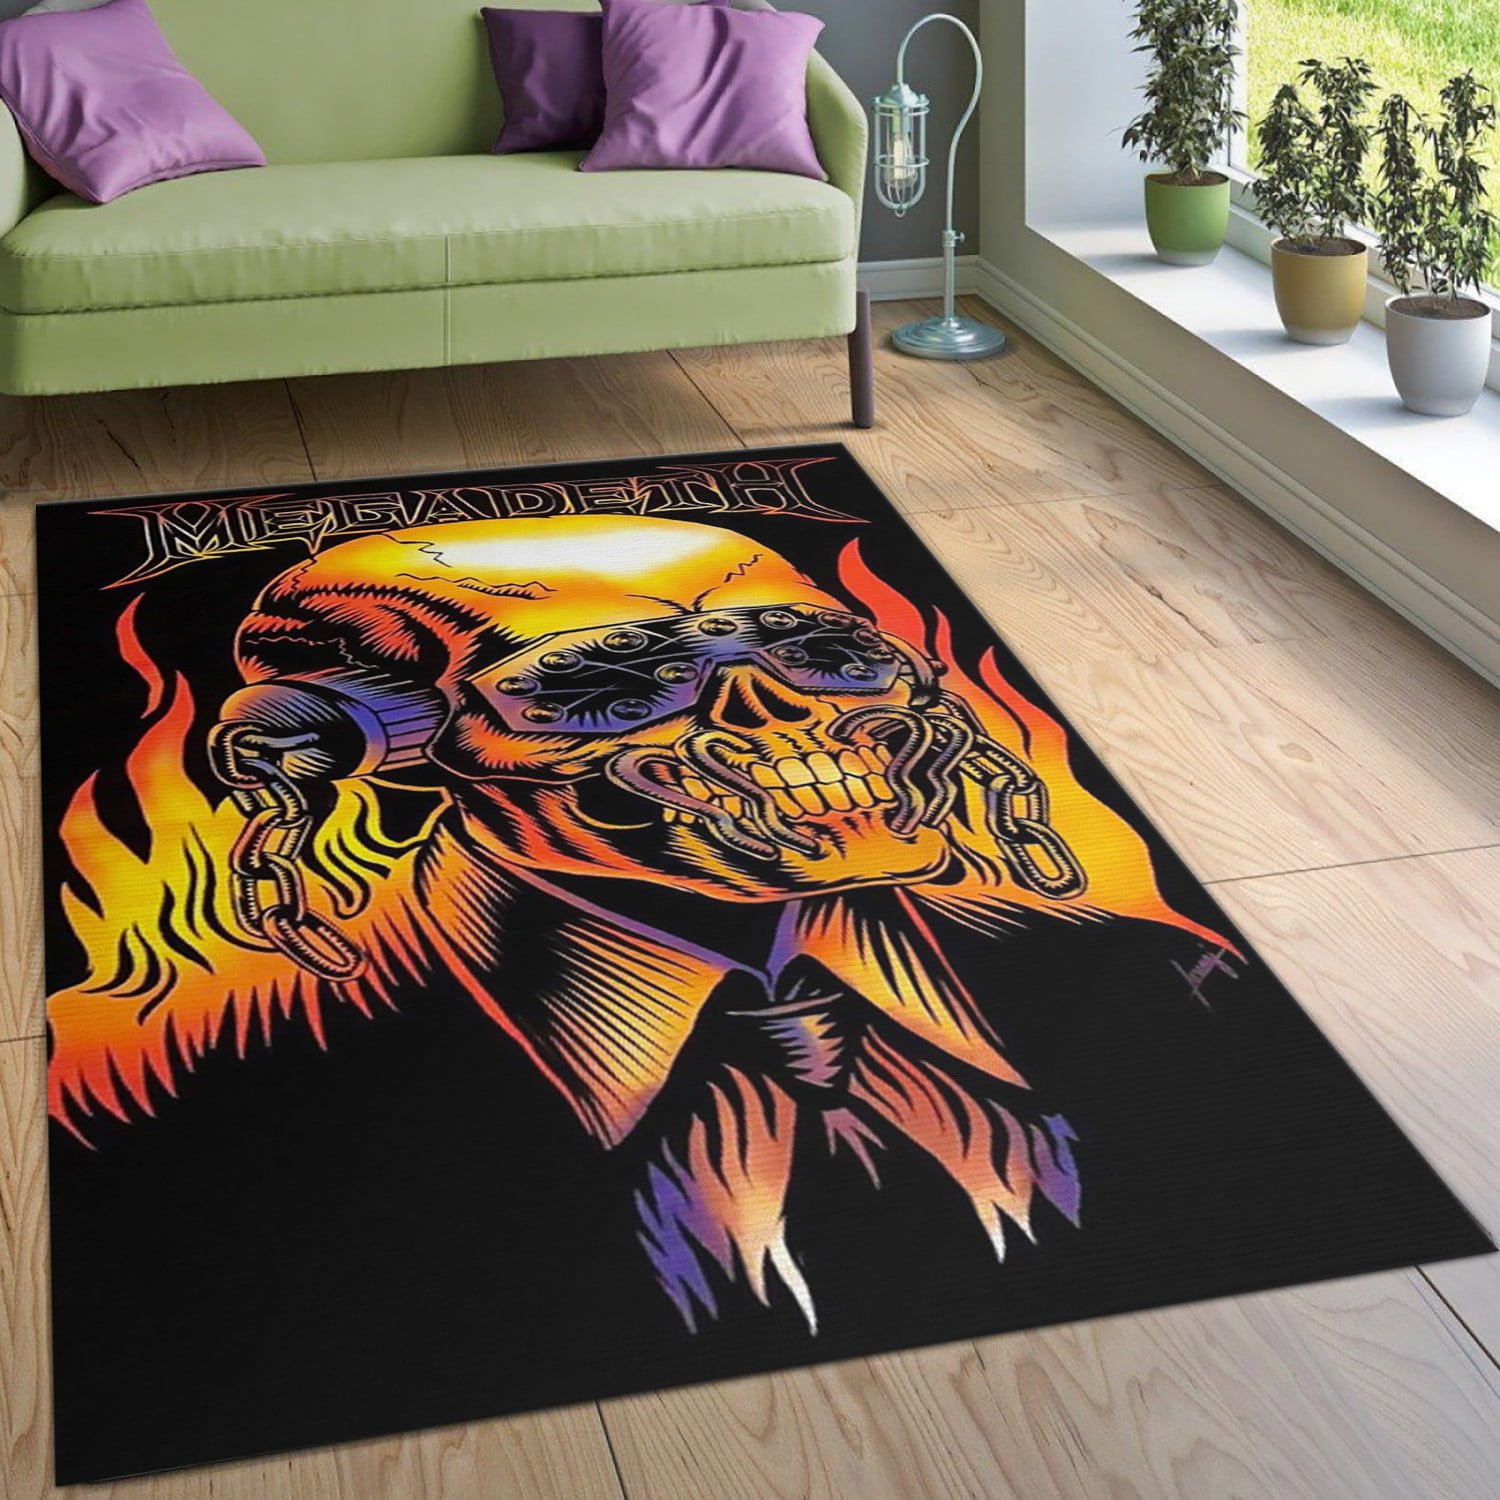 Megadeth Band Area Rug Music Floor Decor Carpet Titles